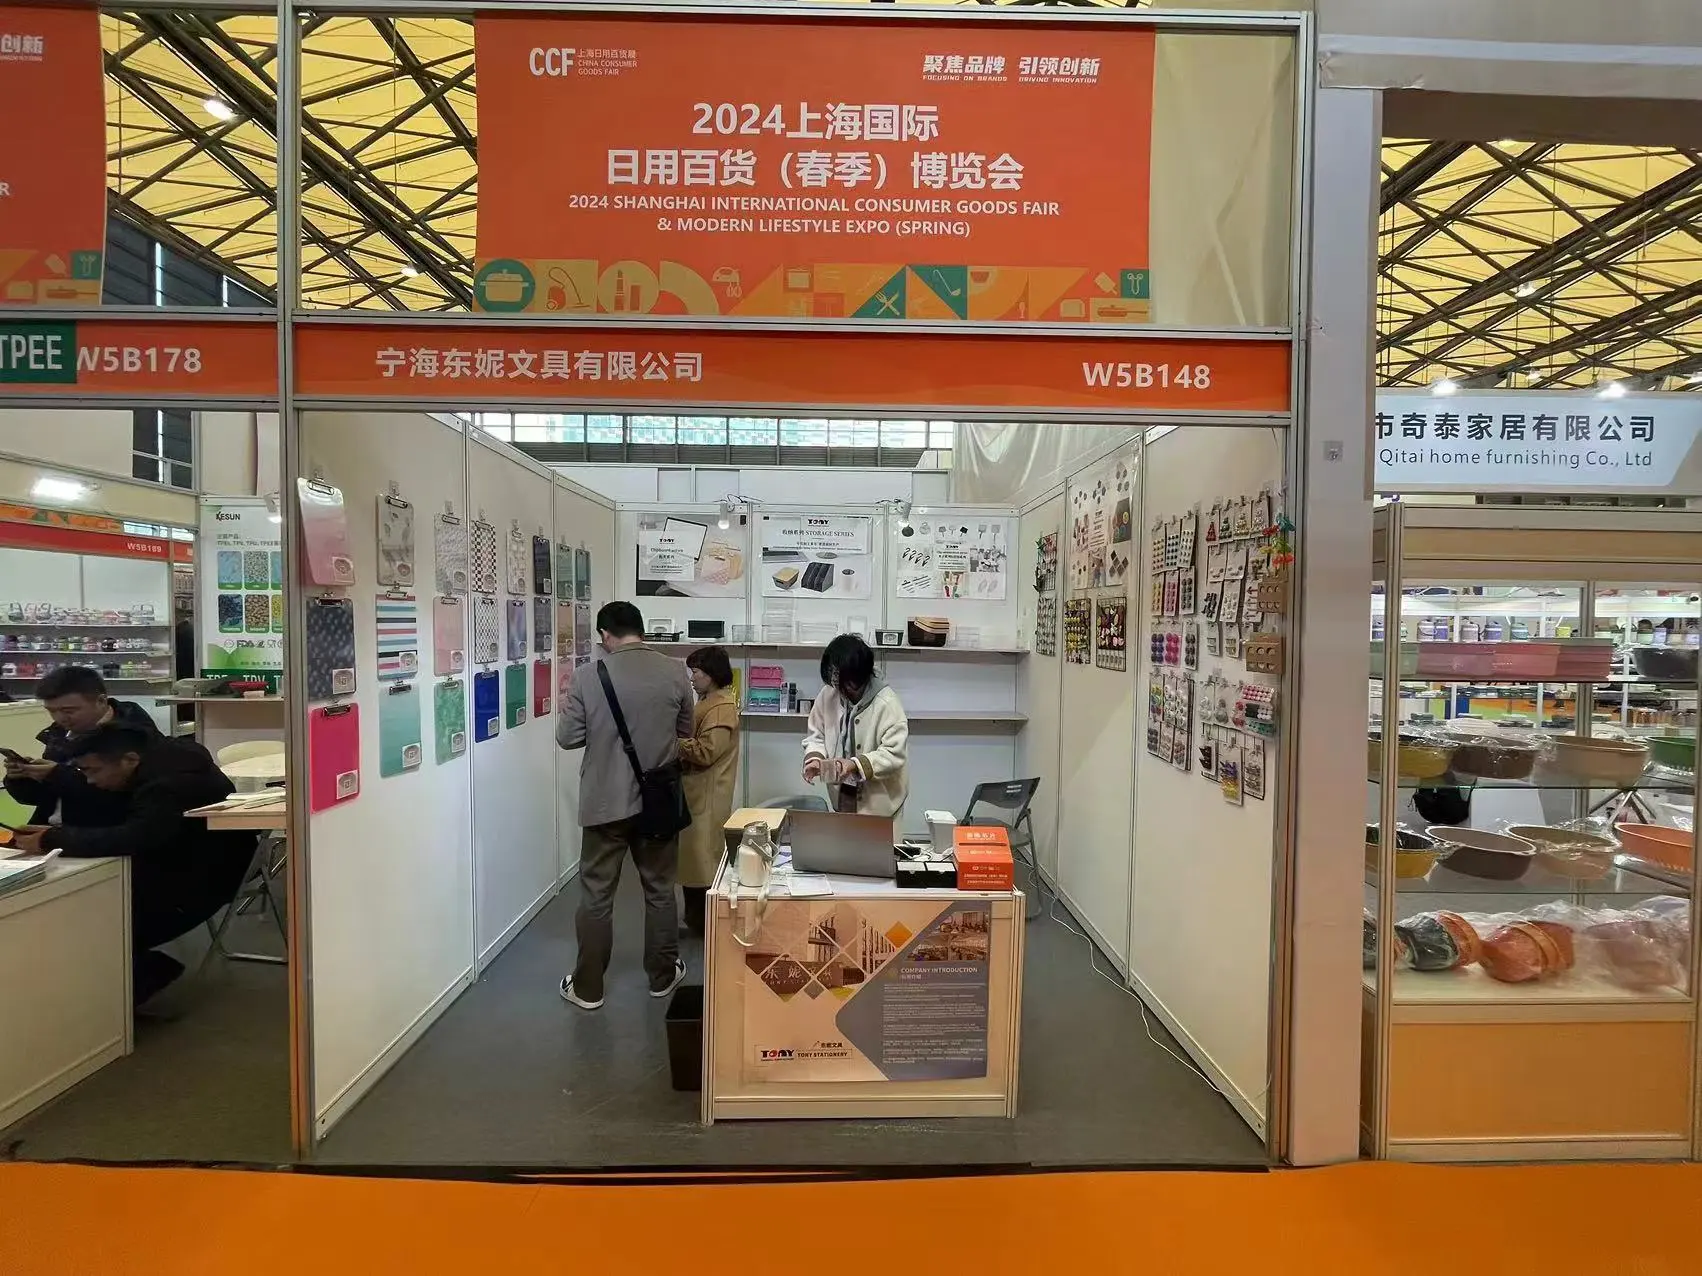 Tony Stationery Exhibits at 2024 Shanghai International Consumer Goods Fair